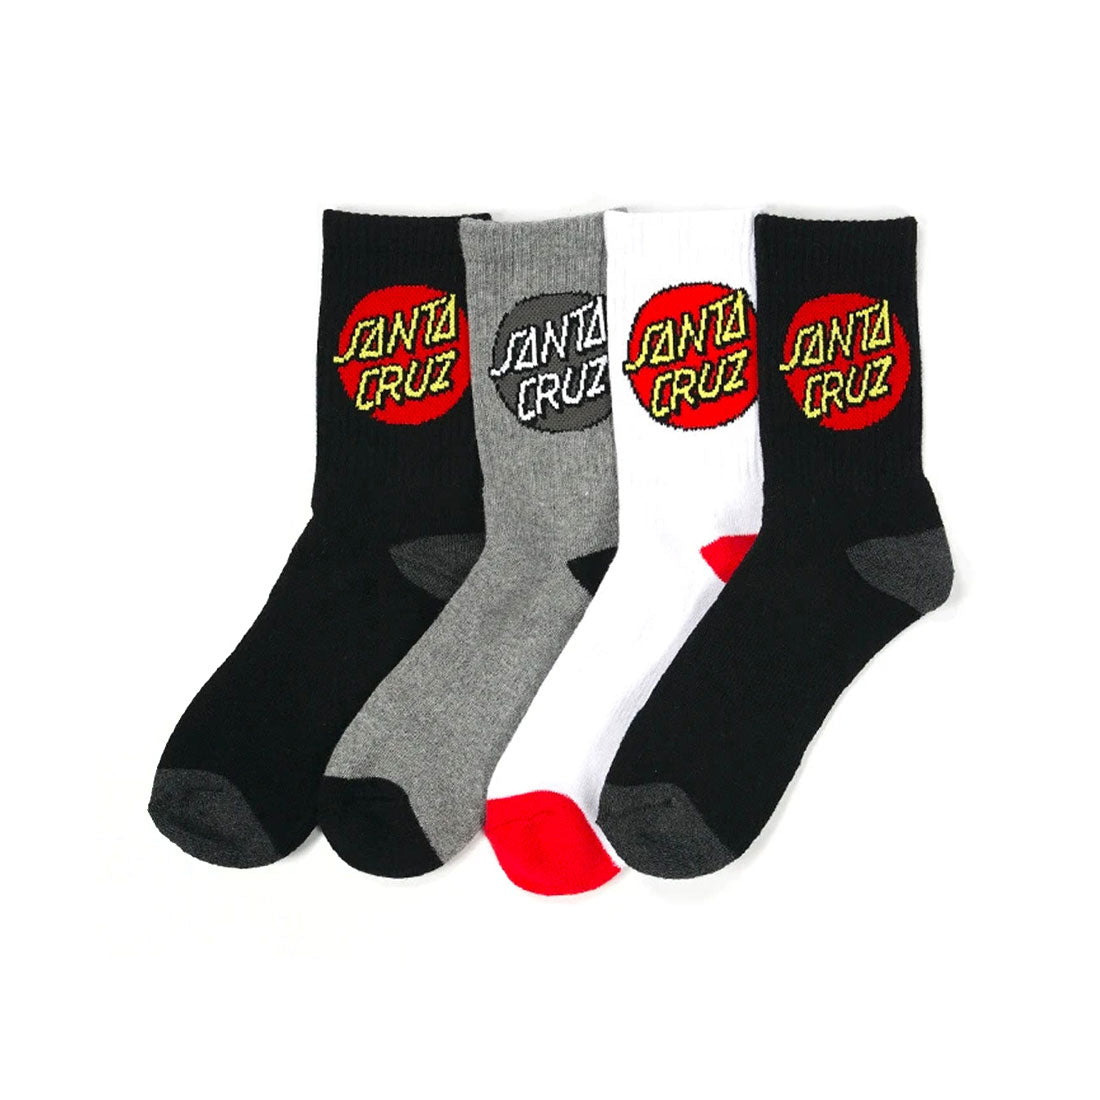 Santa Cruz Youth Crew Socks 4pk - Classic Dot Apparel Socks